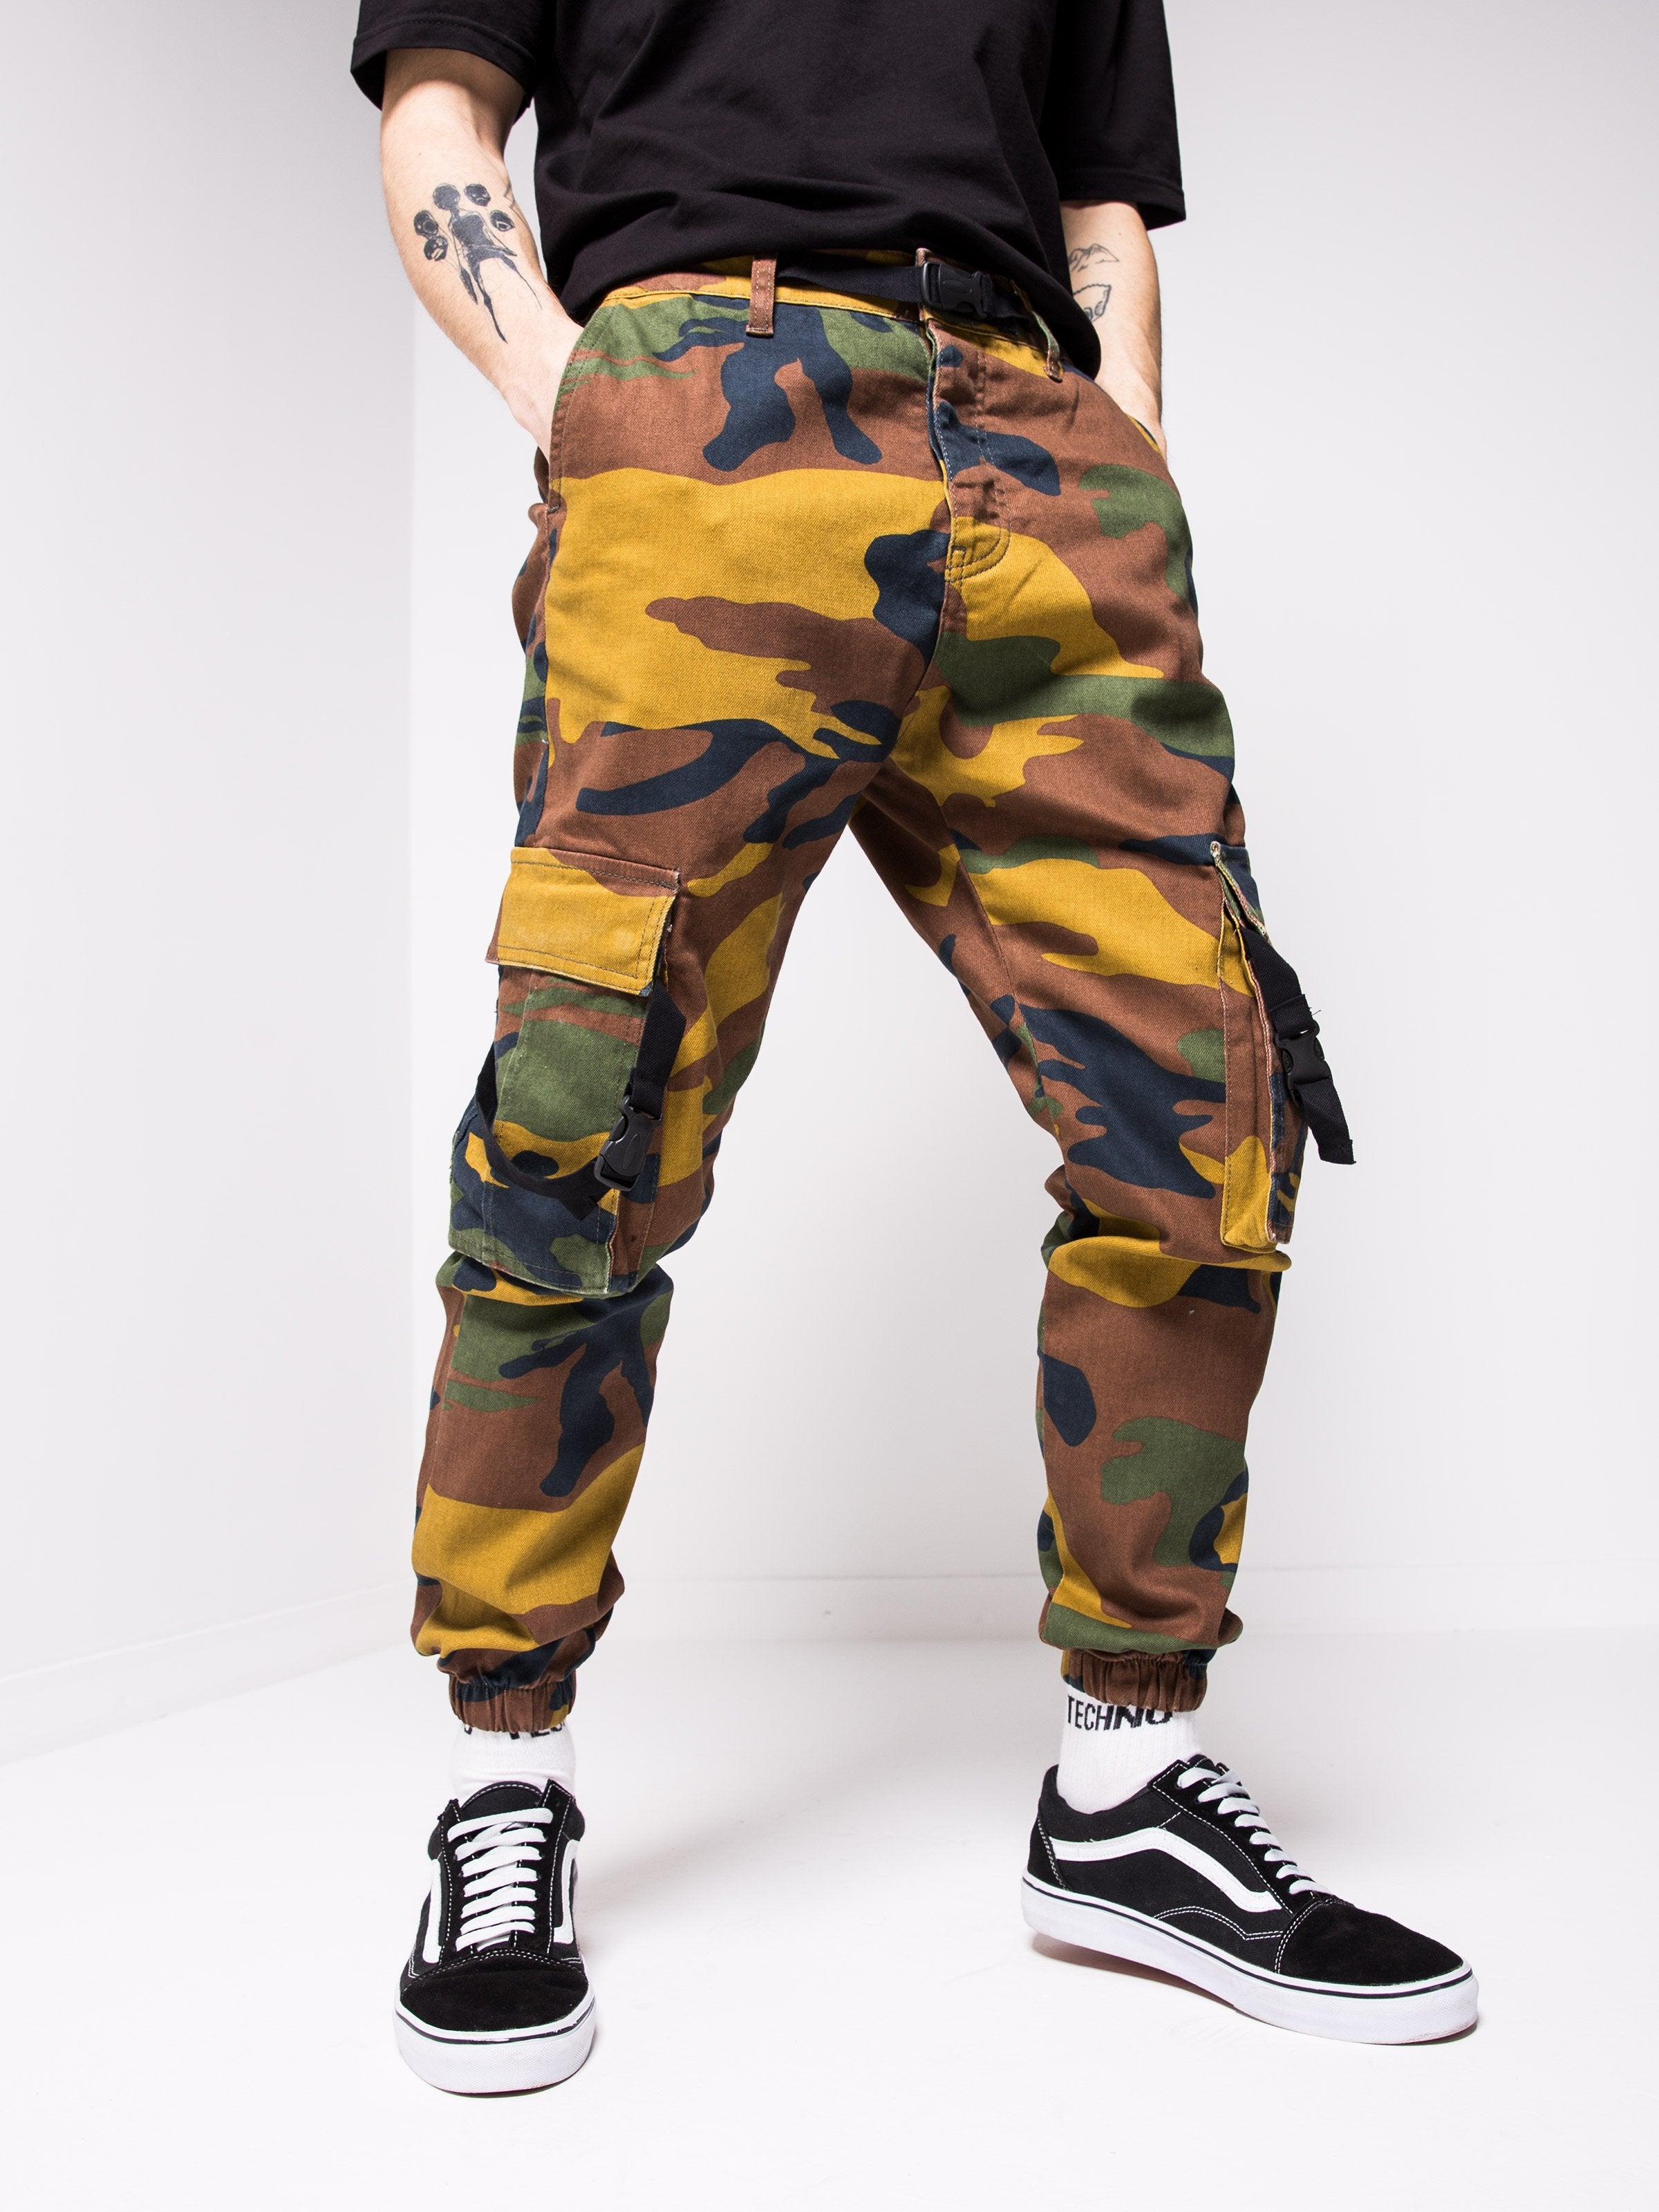 Men's Camouflage Jeans Pants | Camouflage Pants Biker | Camouflage Pants  Men - Fashion - Aliexpress